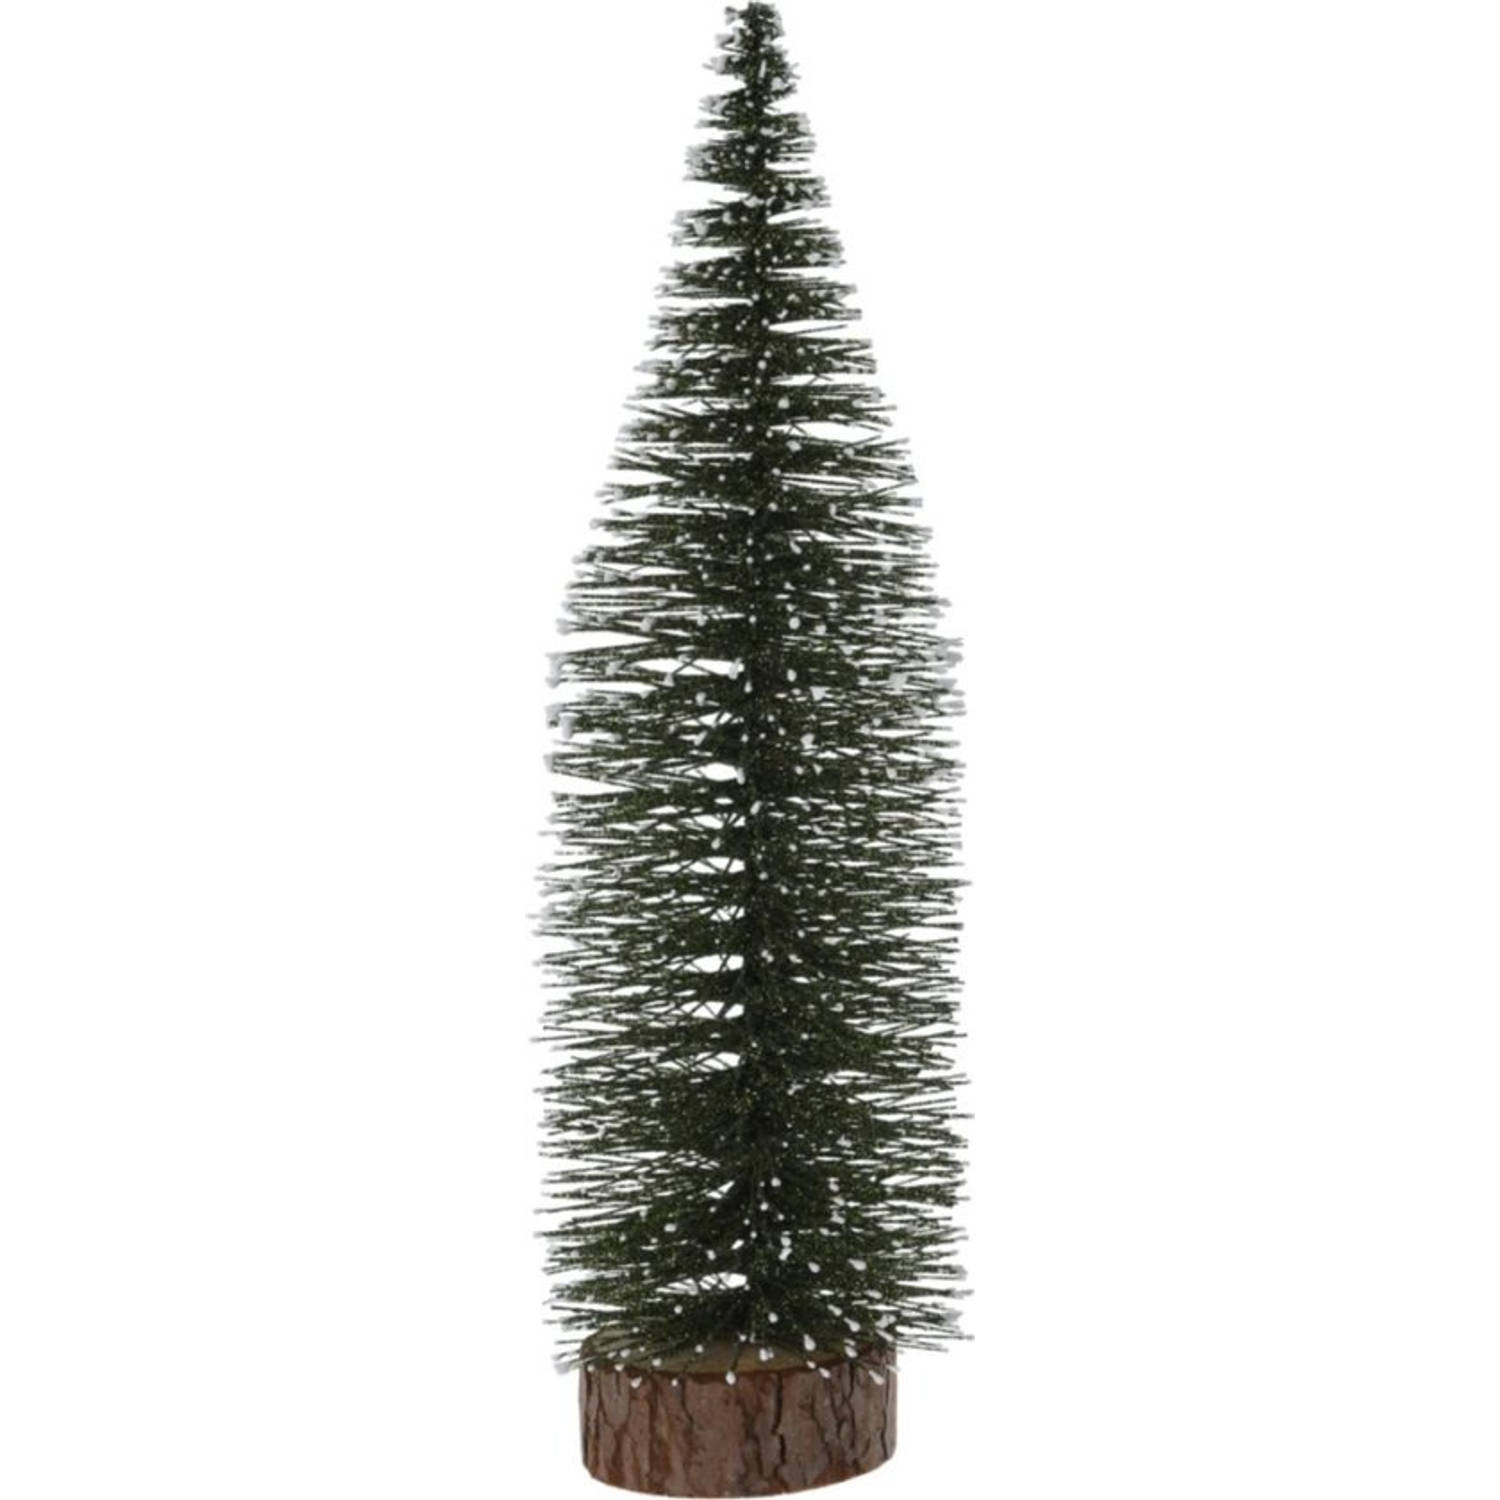 Kerstboompje groen met glitter - 35 cm